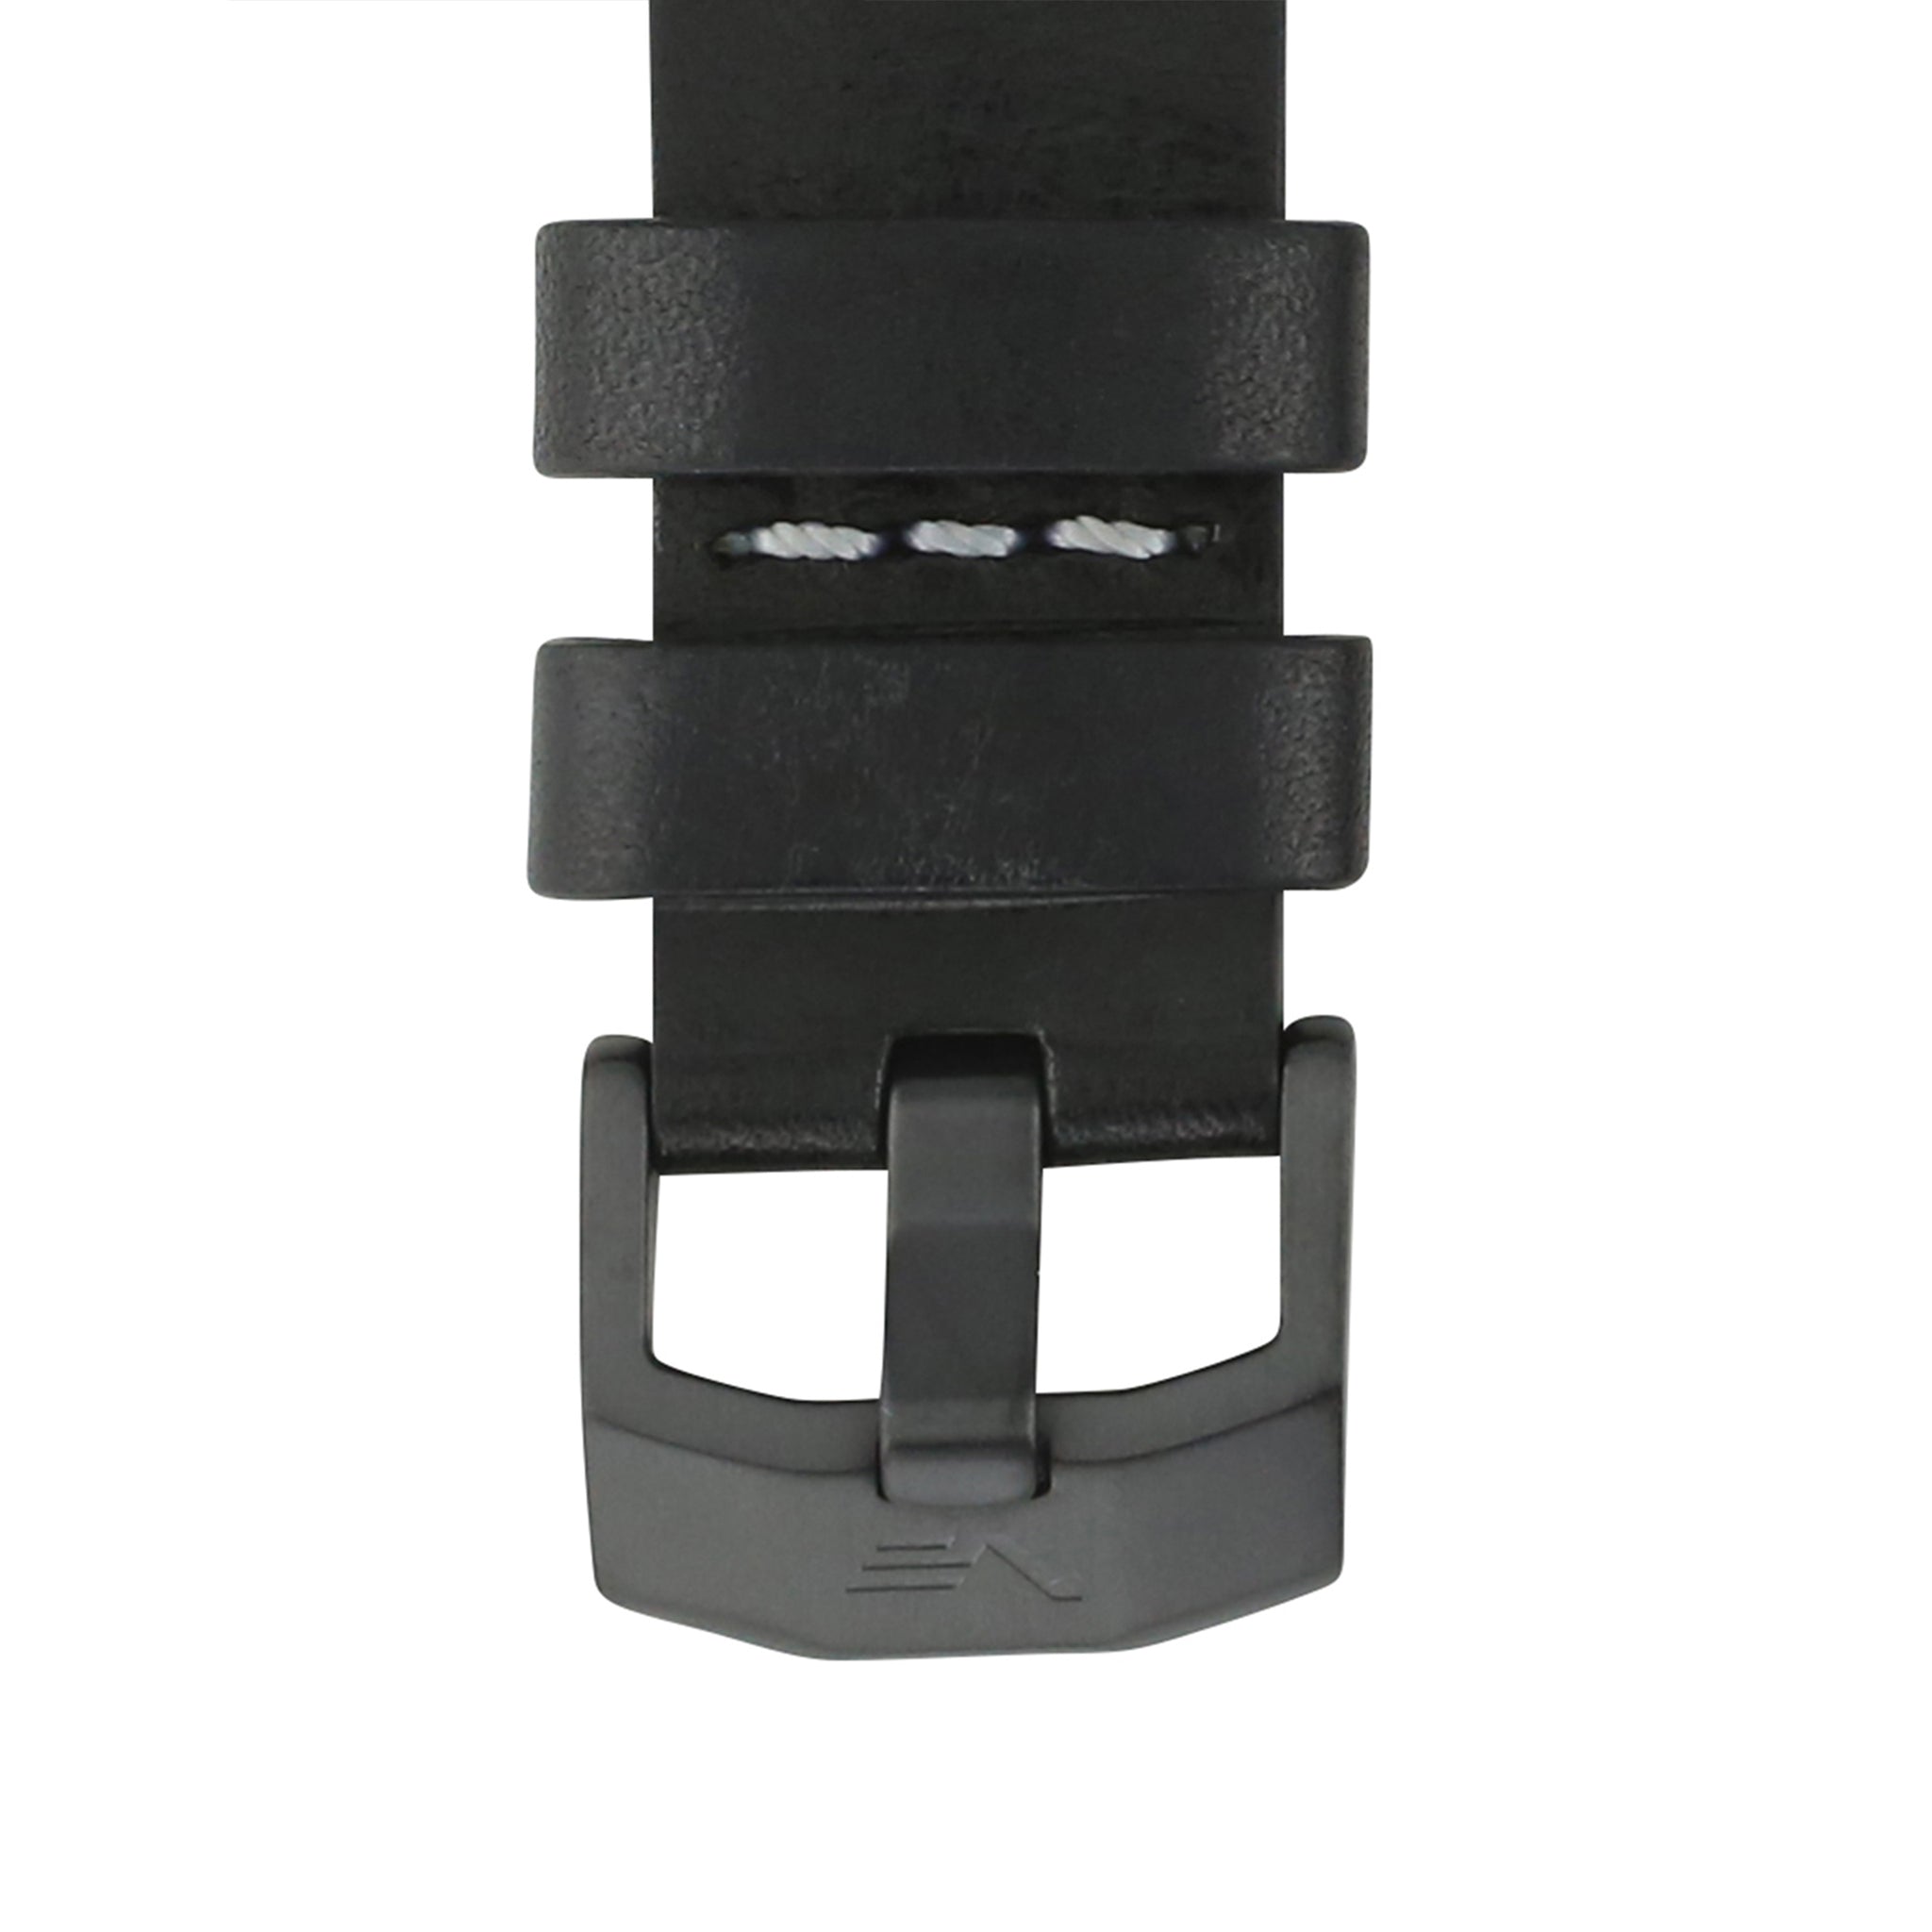 - ROCKET N1 BLACK & WHITE LEATHER STRAP 22mm - BLACK BUCKLE